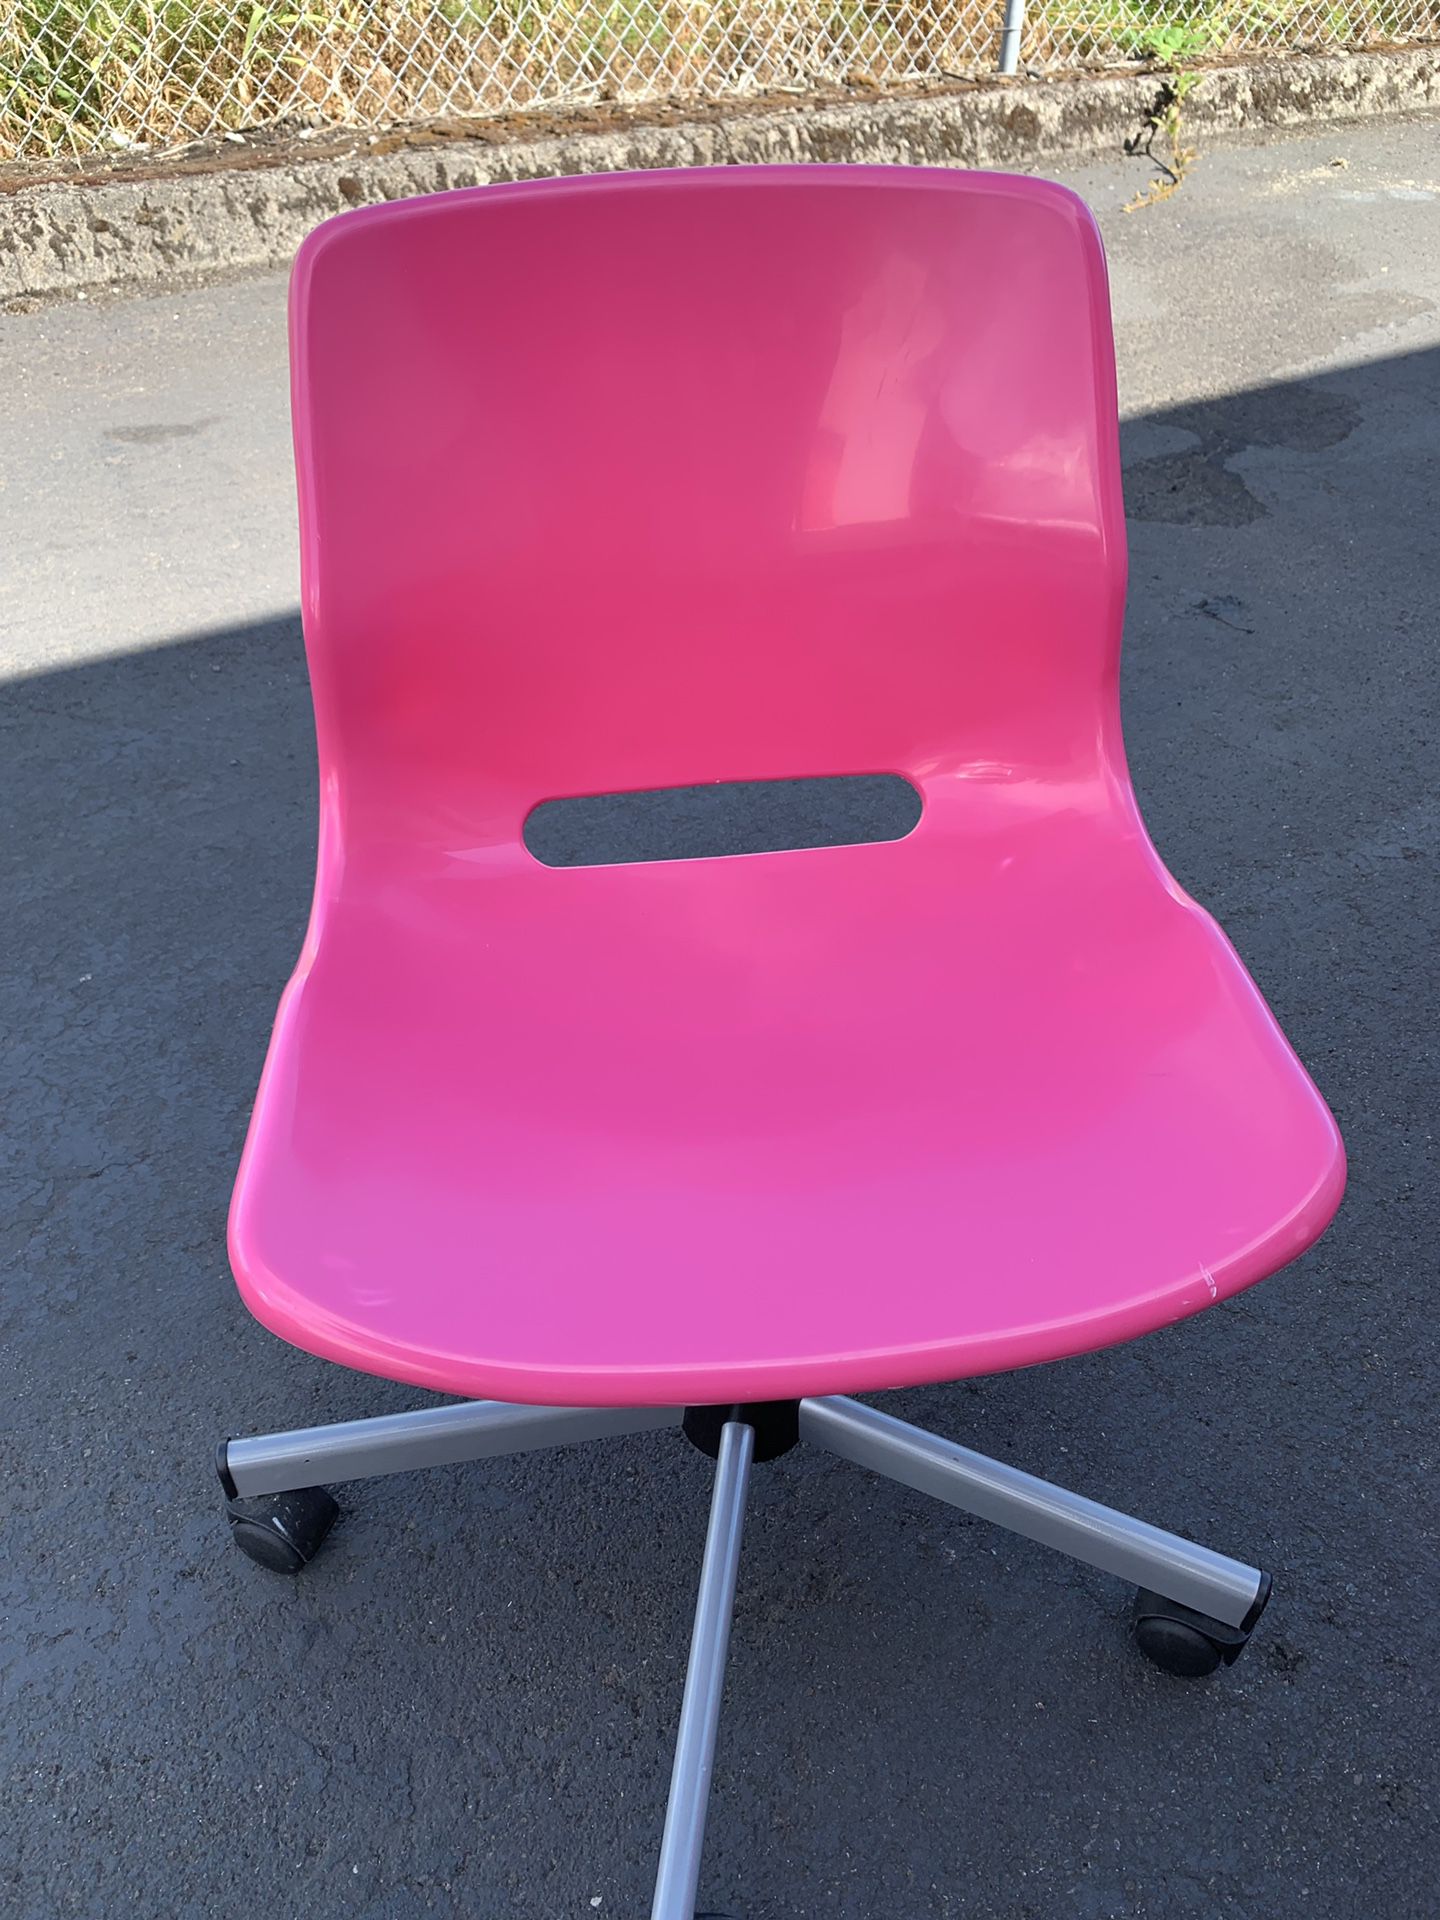 ikea pink office desk chair